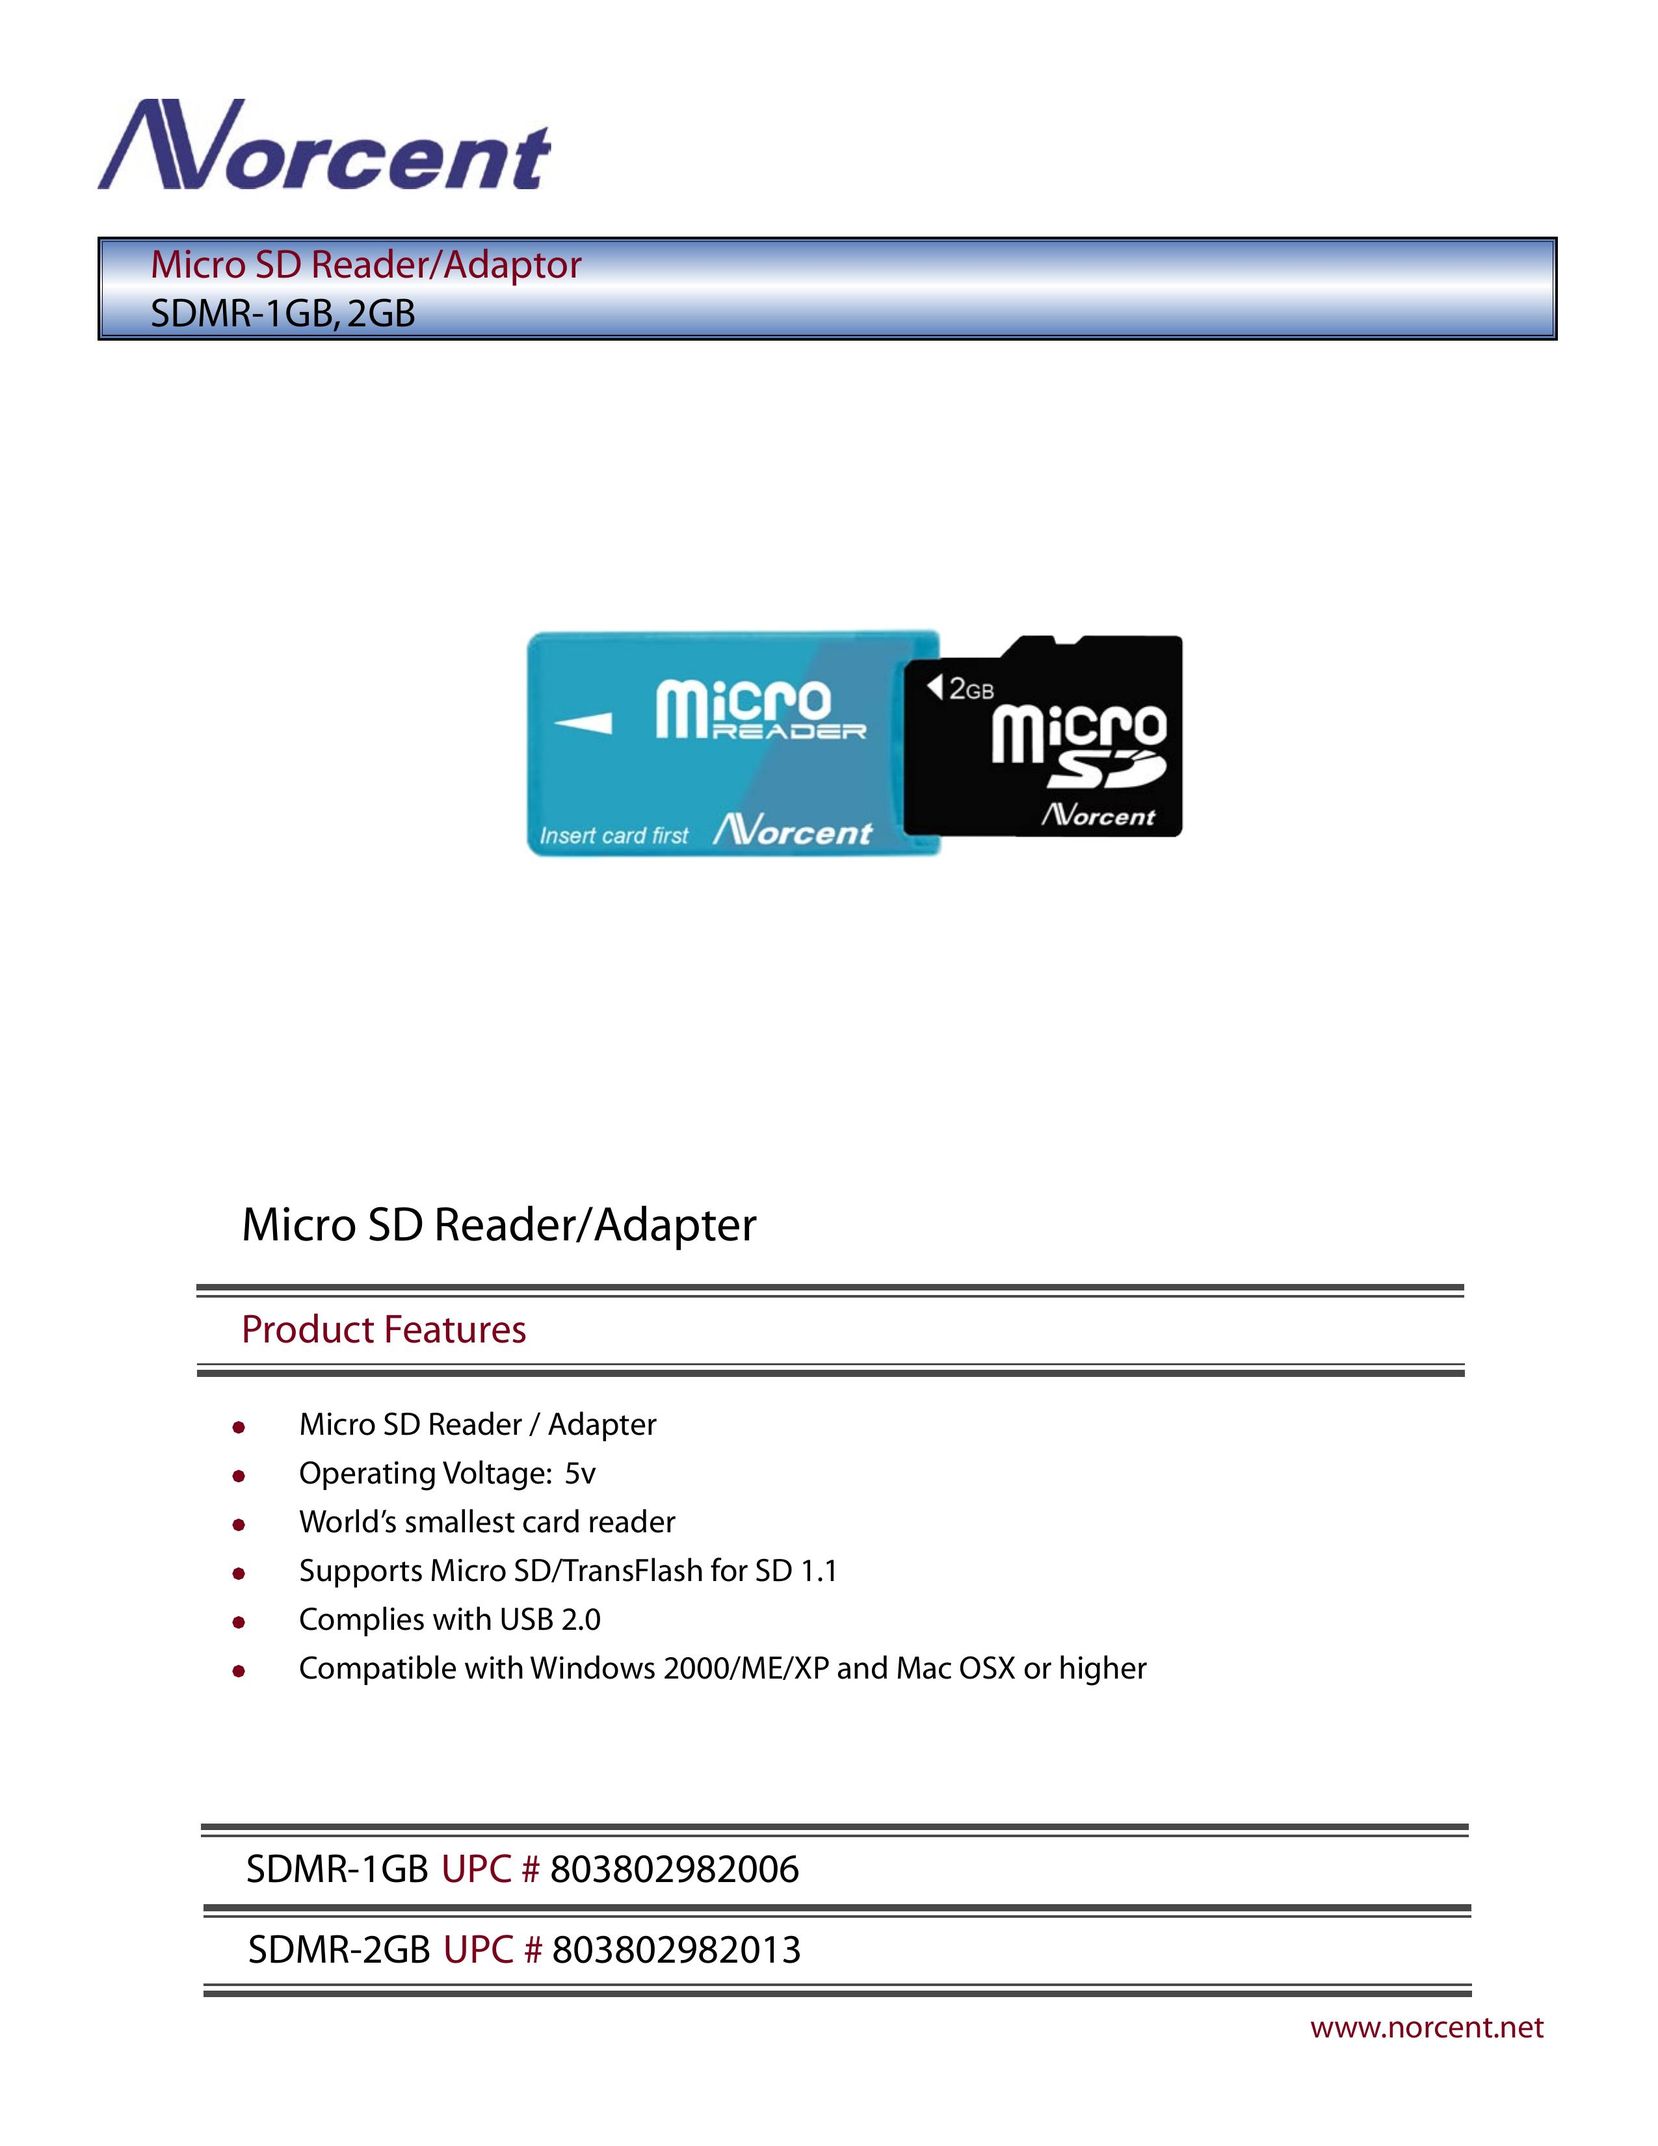 Norcent Technologies SDMR-1GB Network Card User Manual